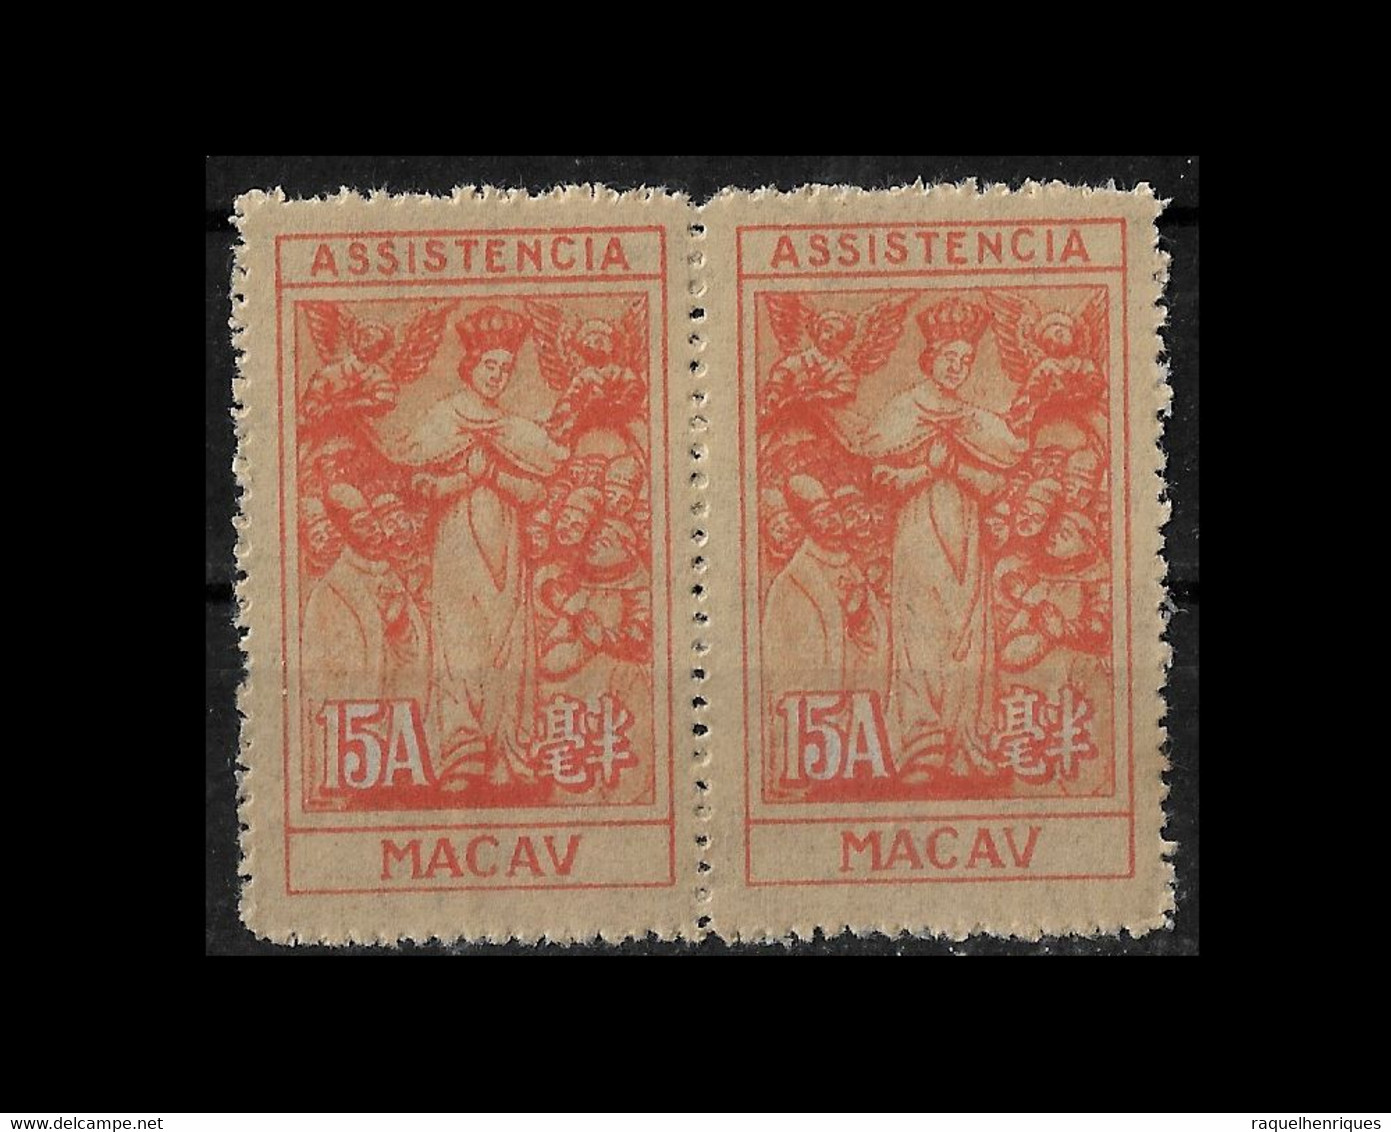 MACAU STAMP - 1945-47 Symbol Of Charity - Inscription "ASSISTENCIA" Perf:11 PAIR MNH (BA5#319) - Segnatasse